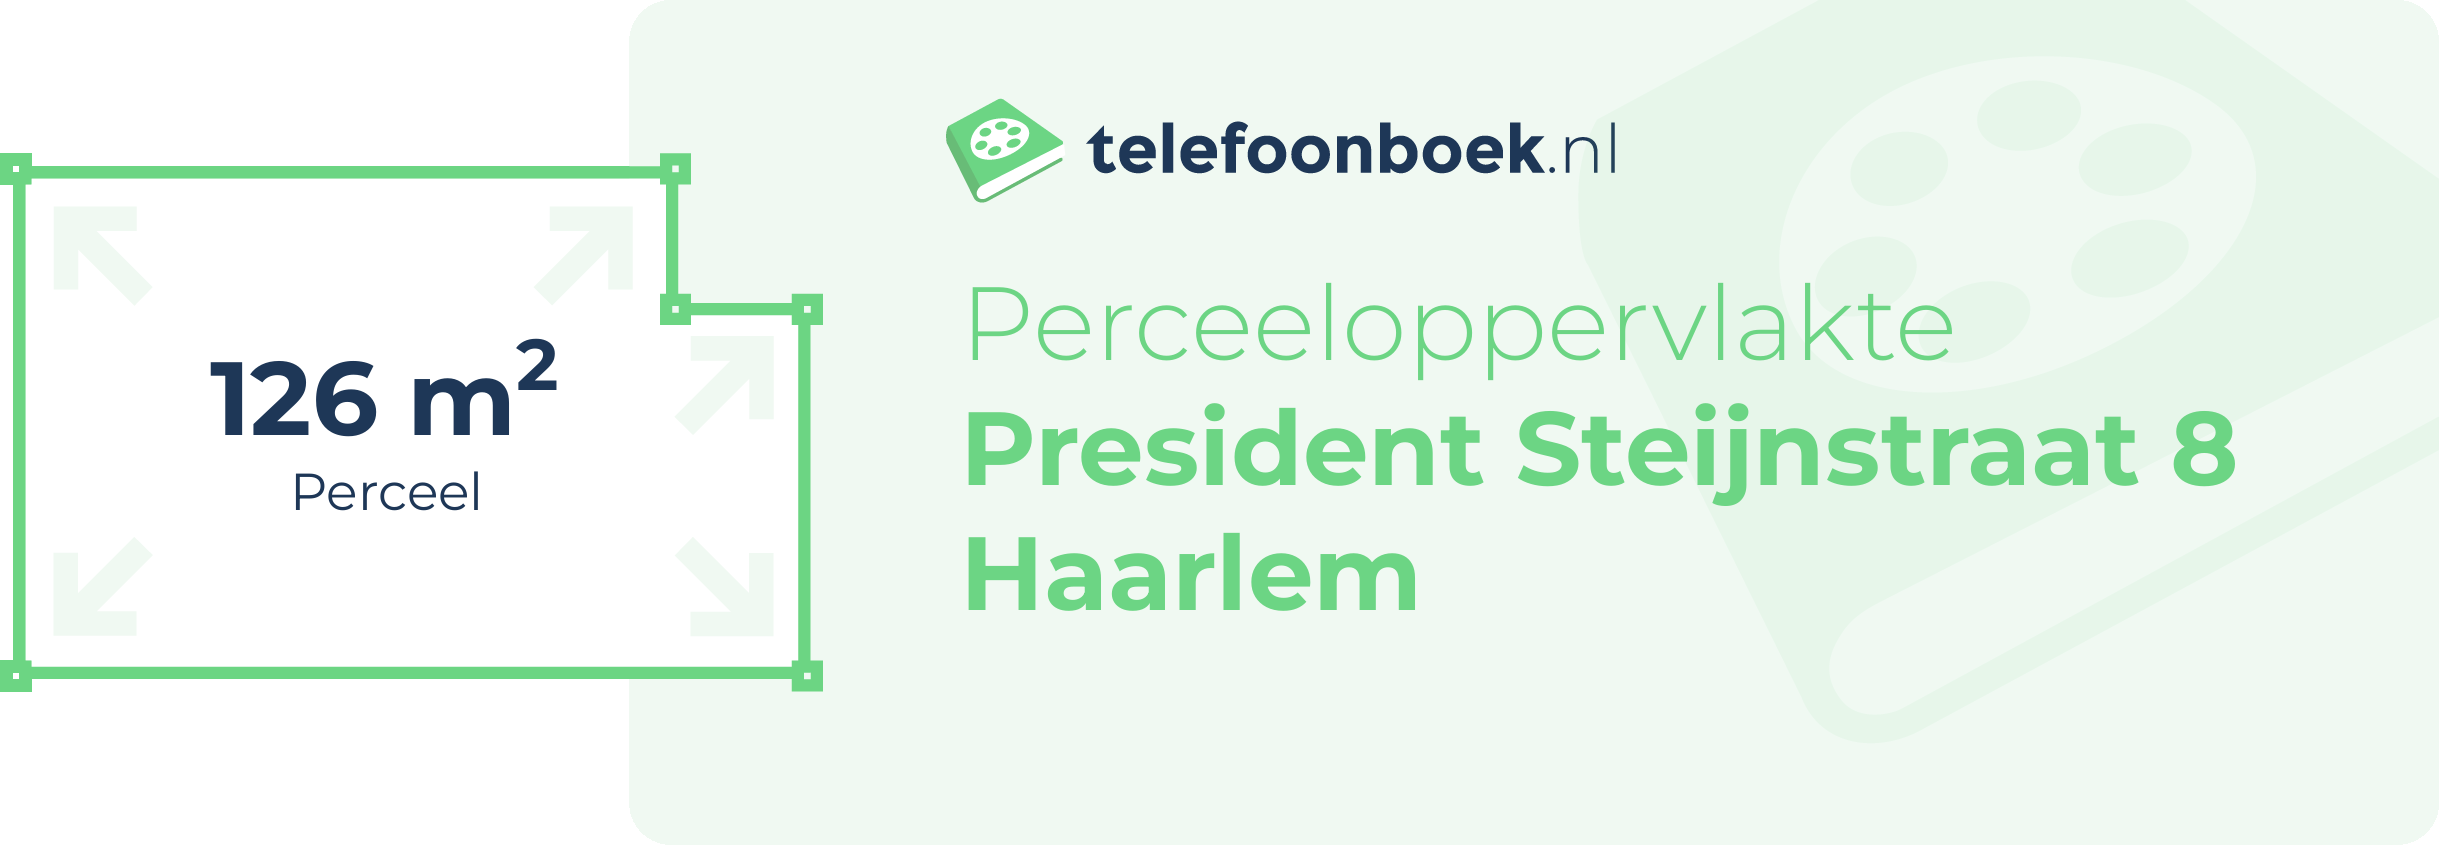 Perceeloppervlakte President Steijnstraat 8 Haarlem